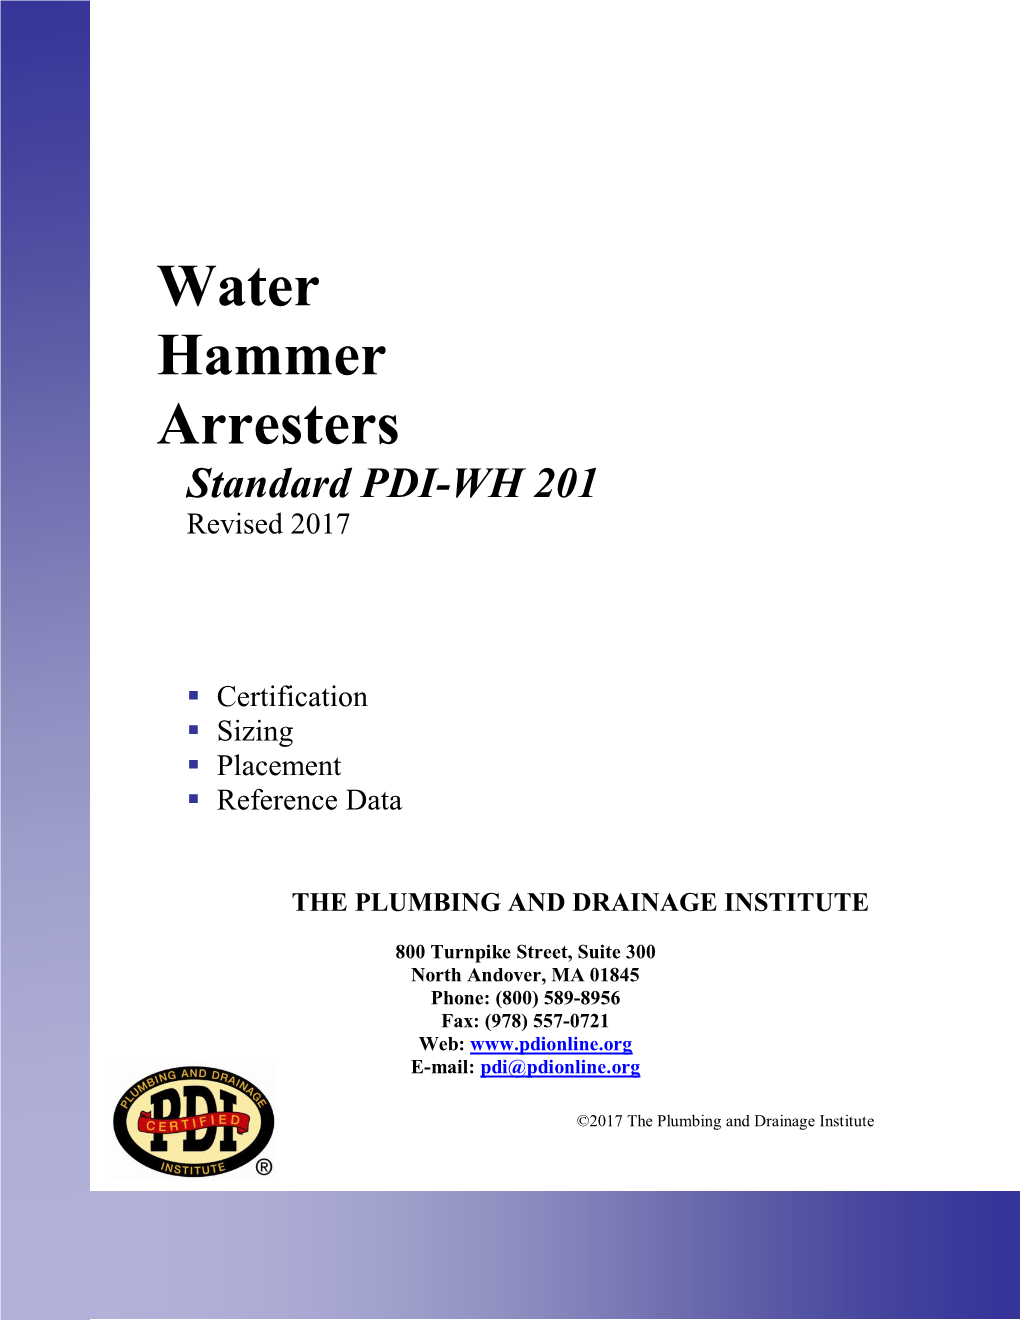 PDI Standard WH 201-2017 — Water Hammer Arresters Standard